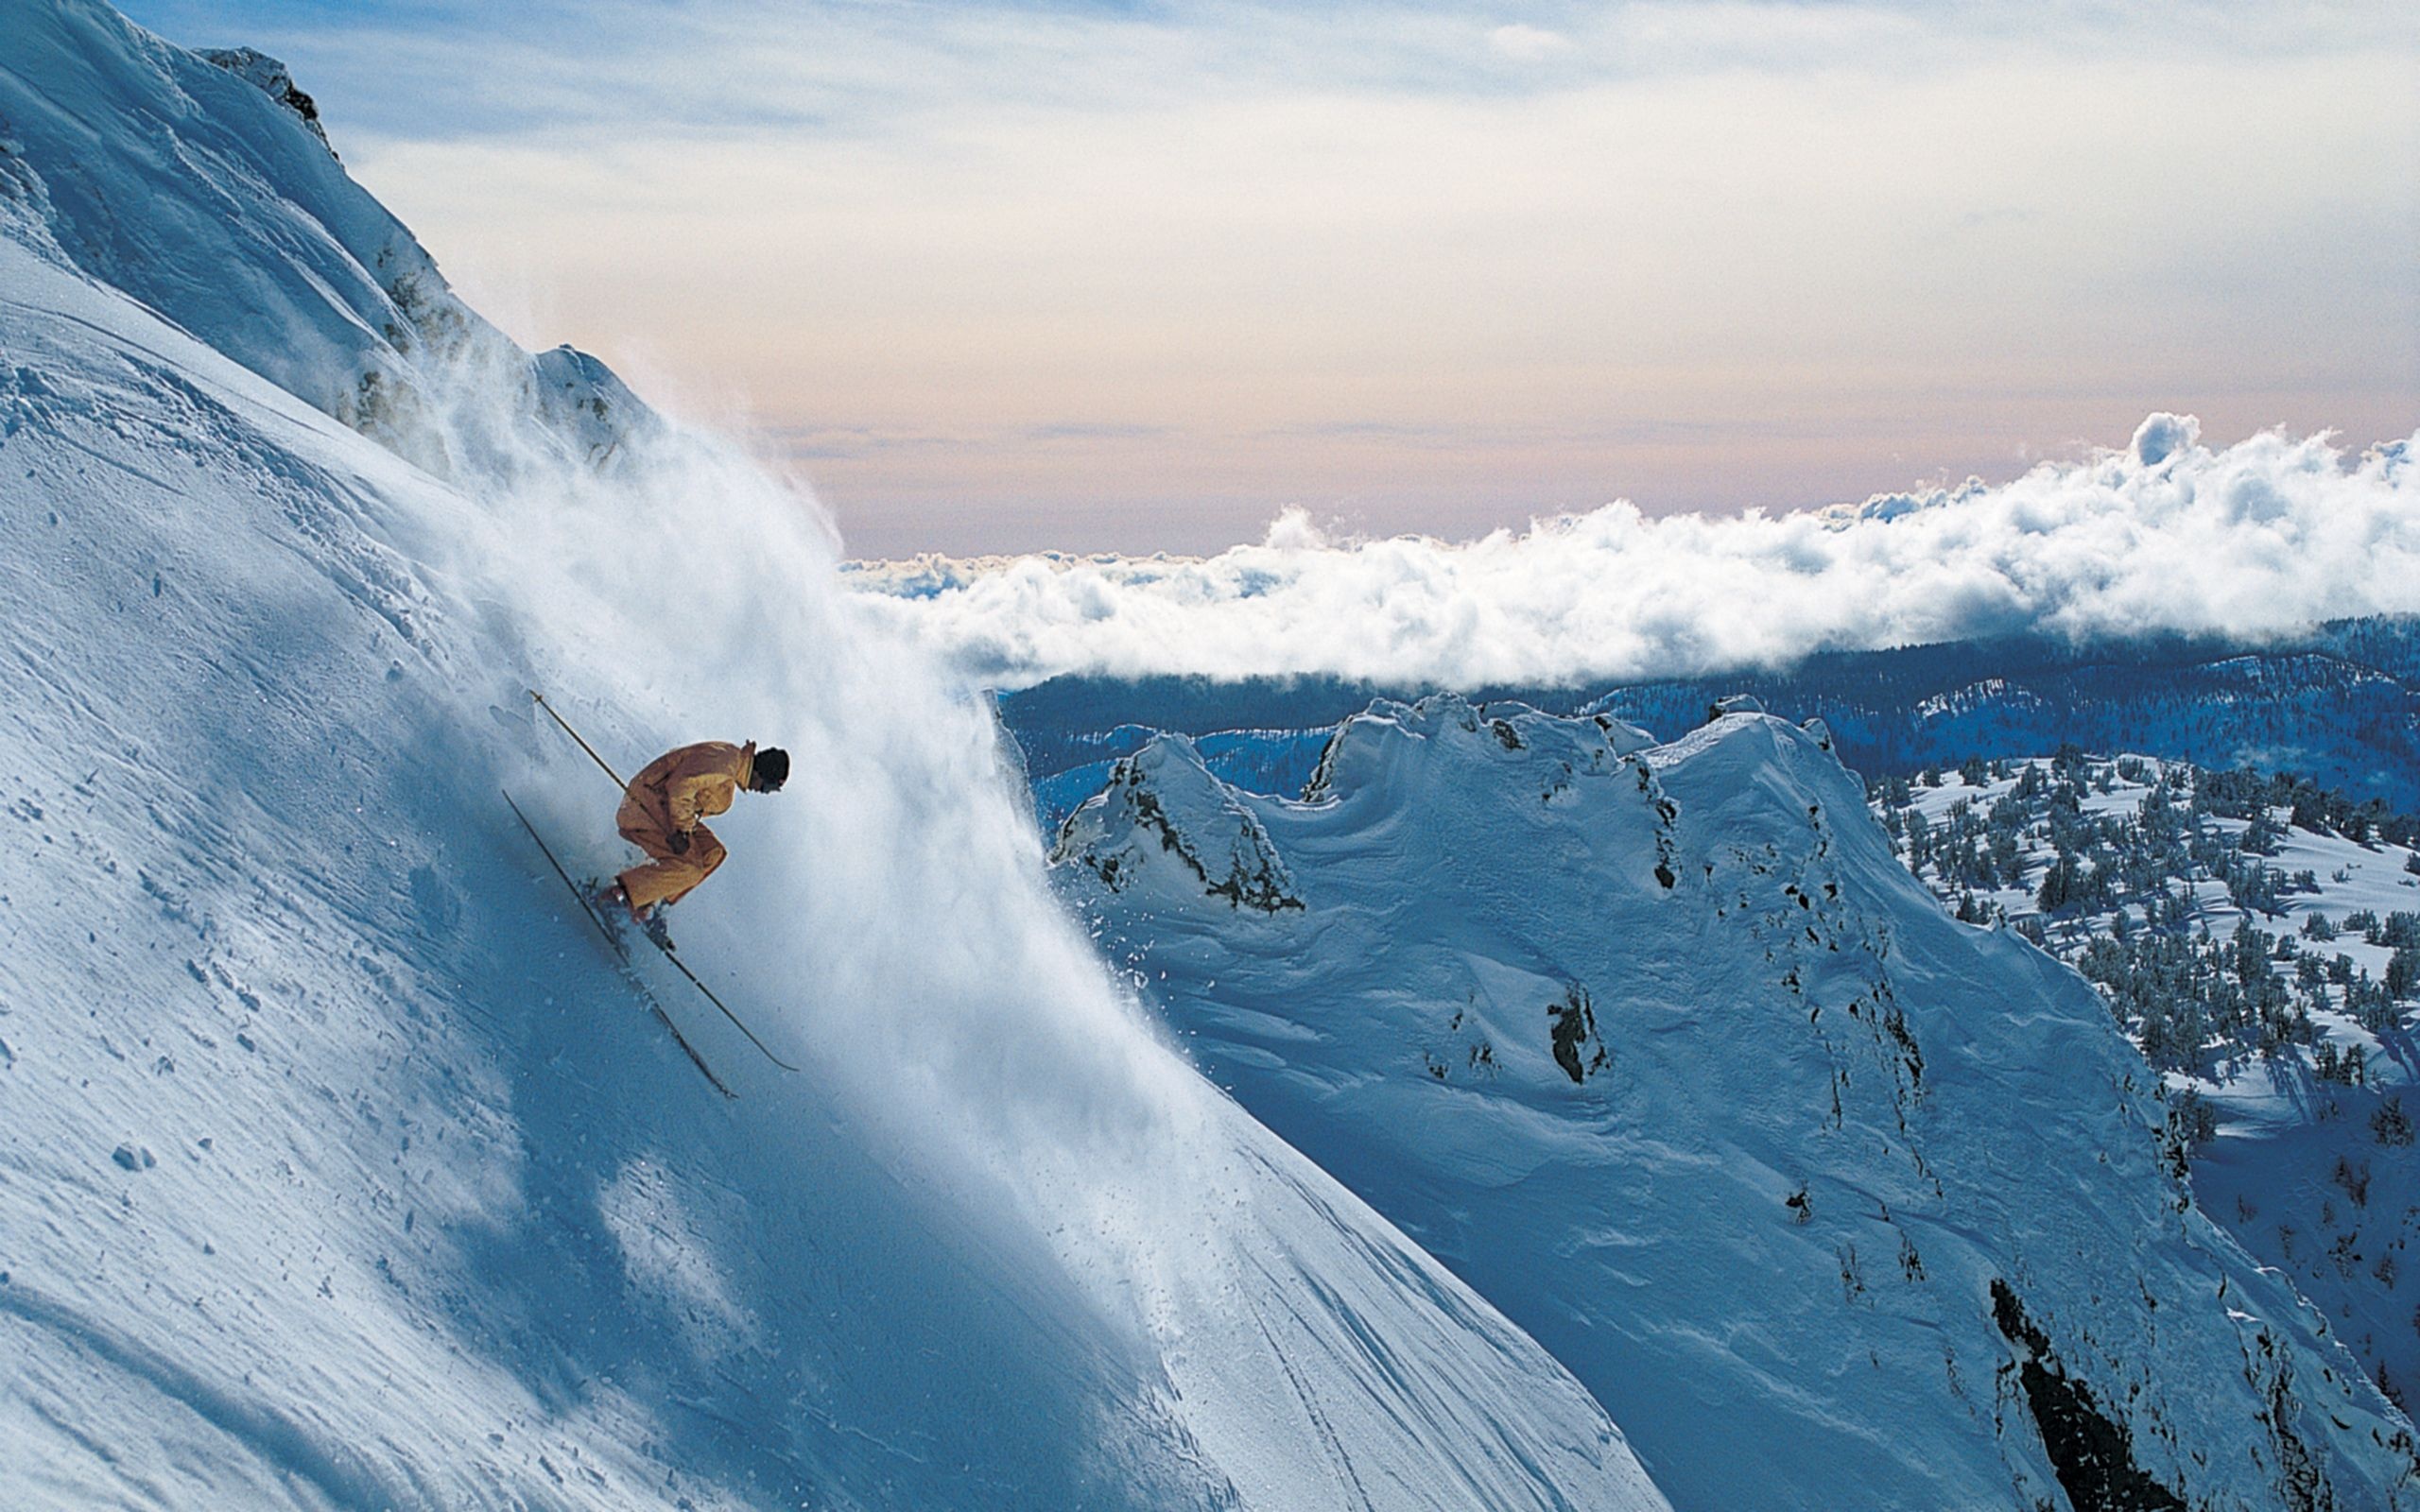 Alpine Skiing: Mountain, Snow adventure, Outdoors, Extreme winter sports, Gliding on a snow. 2560x1600 HD Wallpaper.